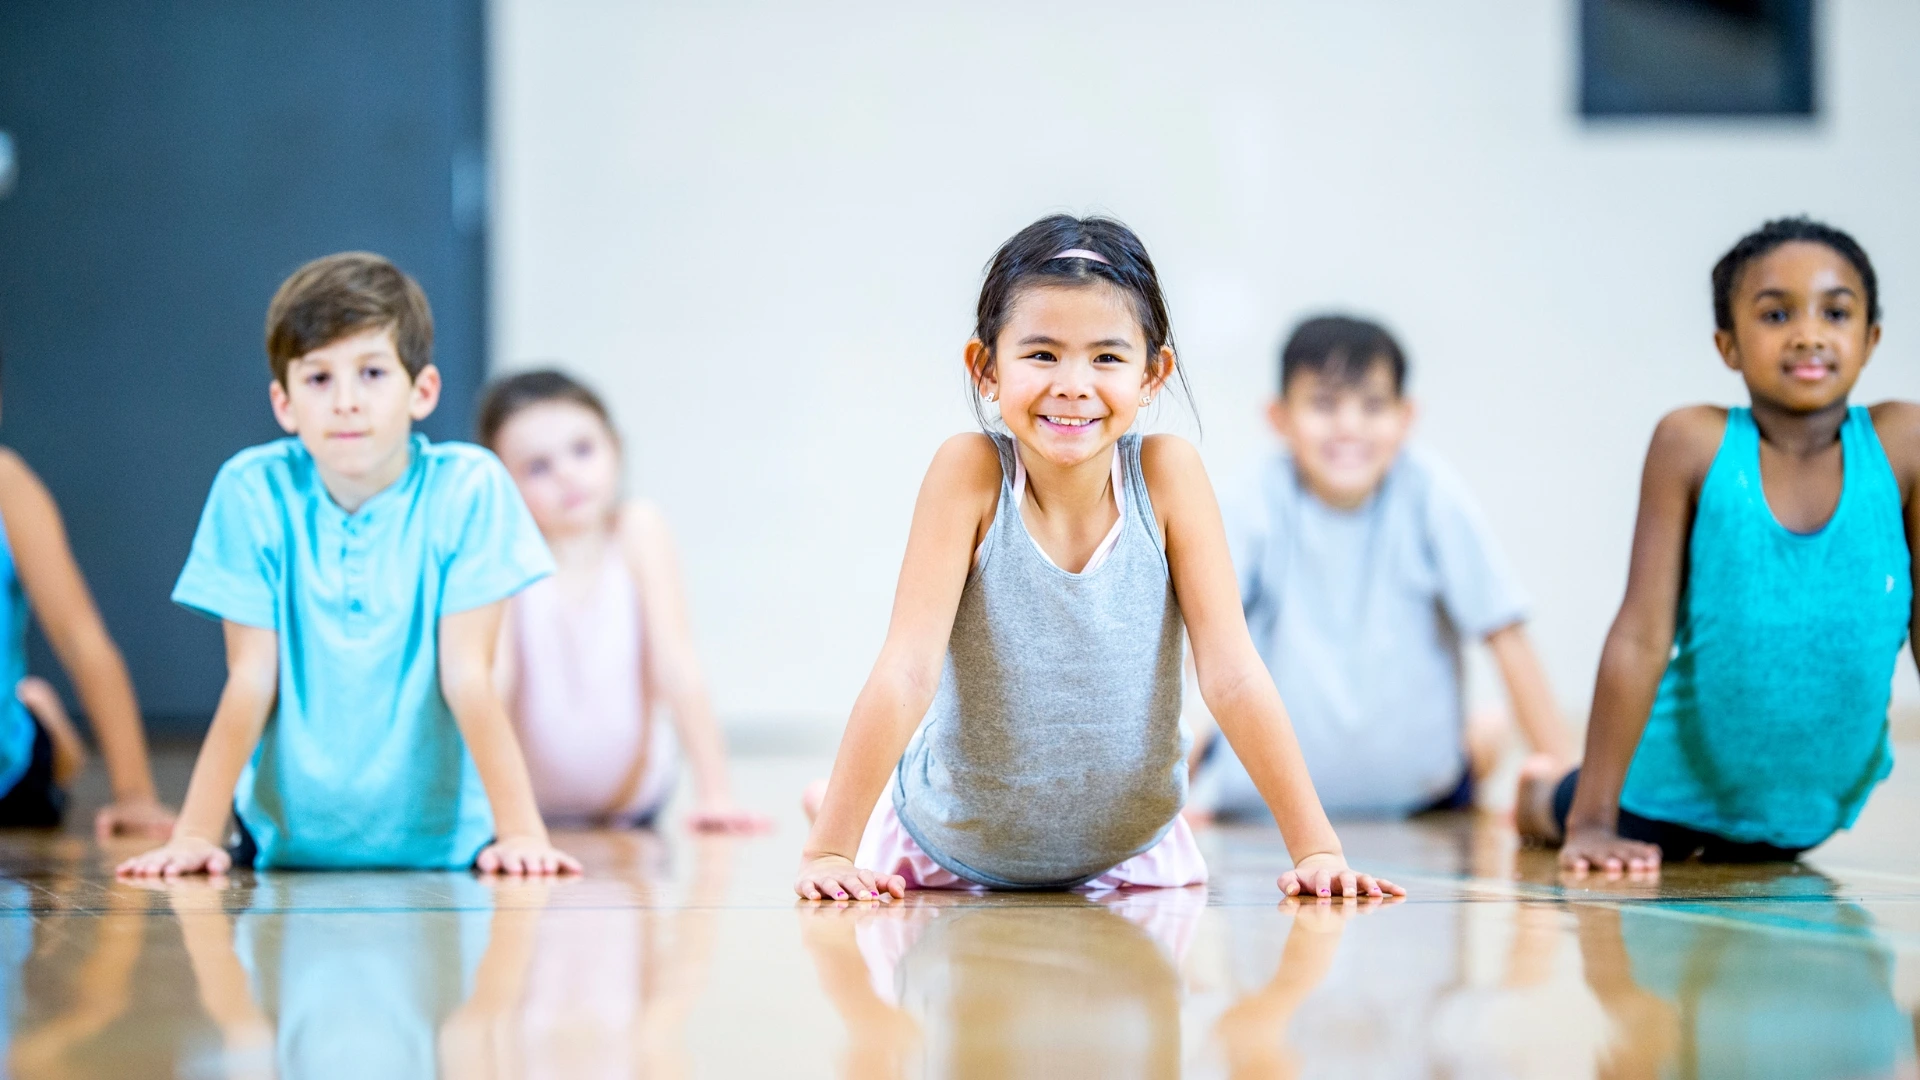 What Skills Does Yoga Teach Children